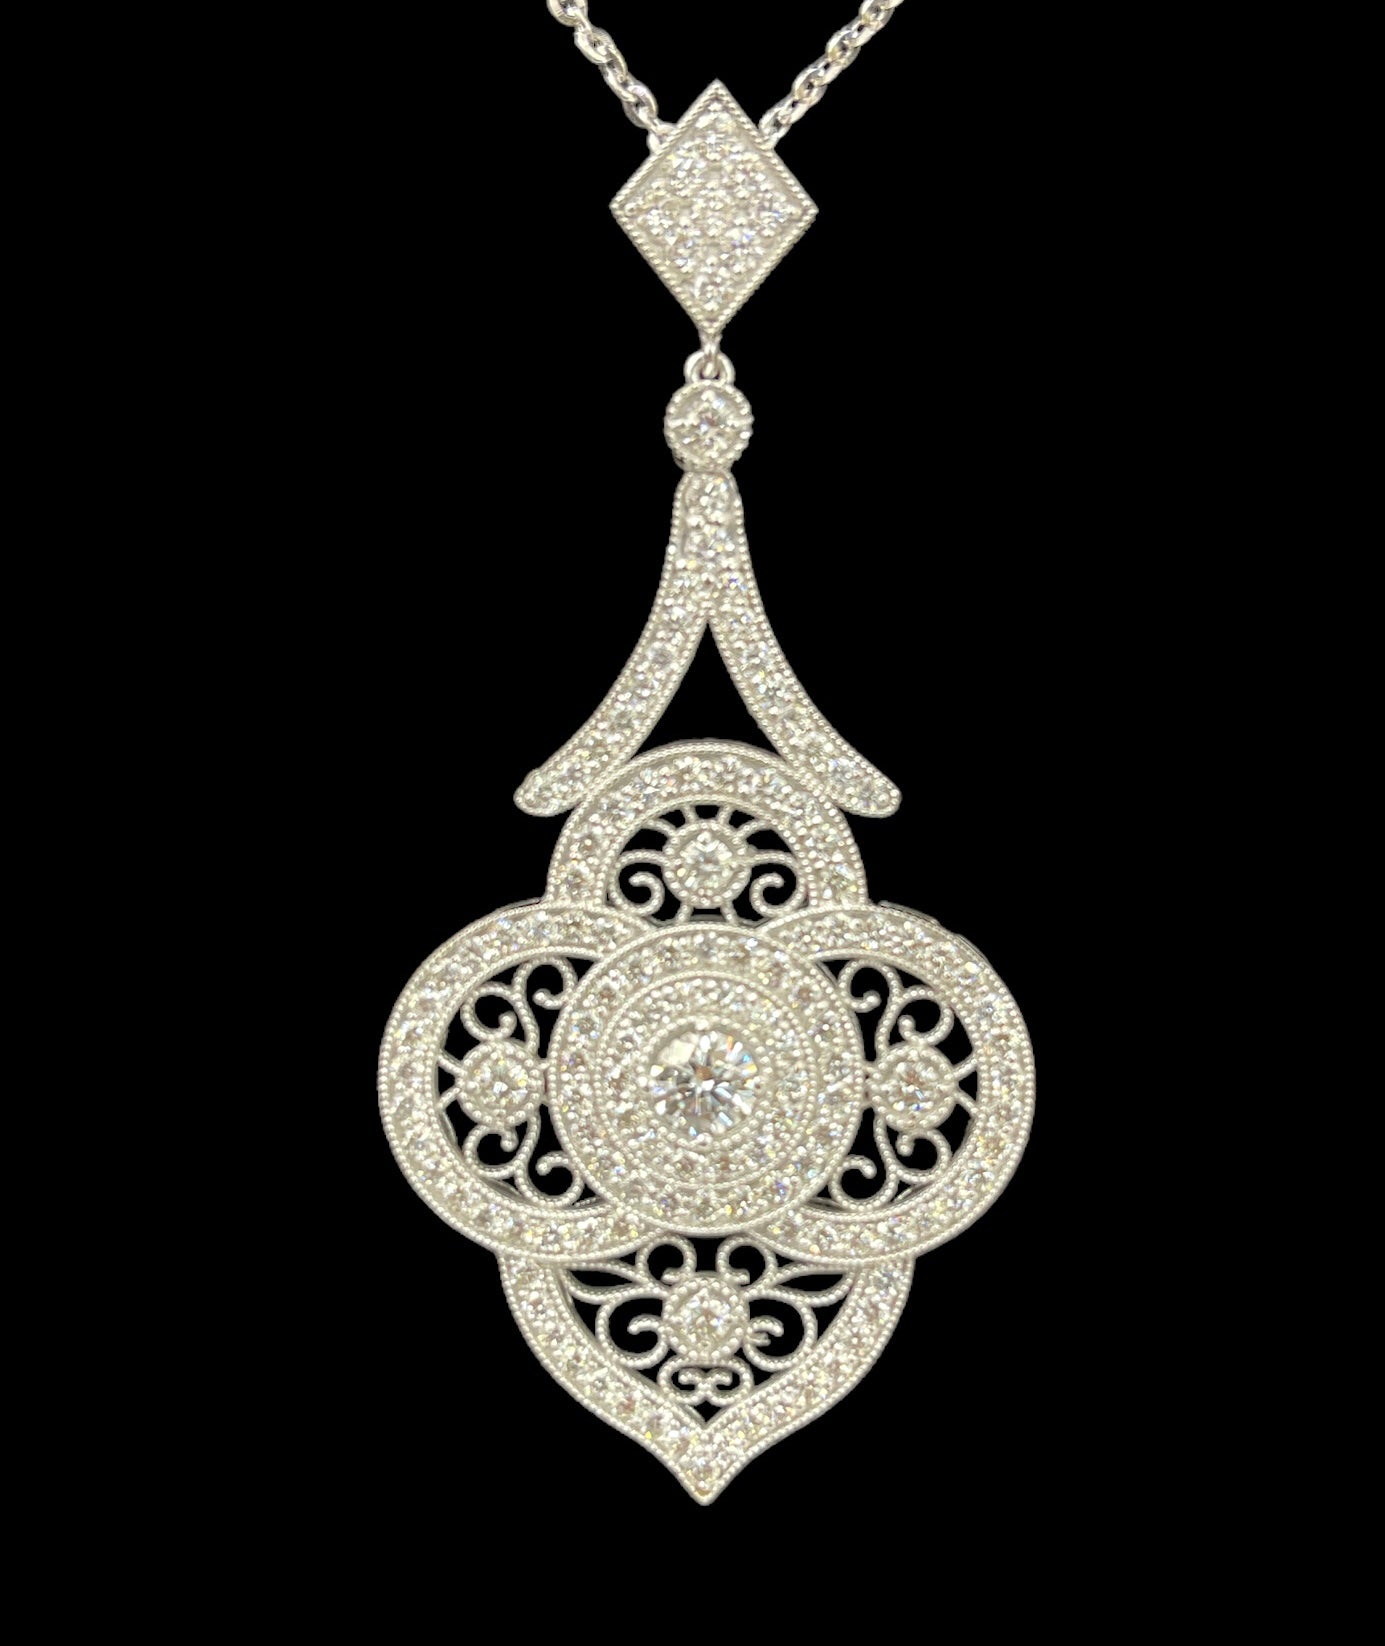 Dream Catcher Diamond Pendant Necklace White Gold 18kt